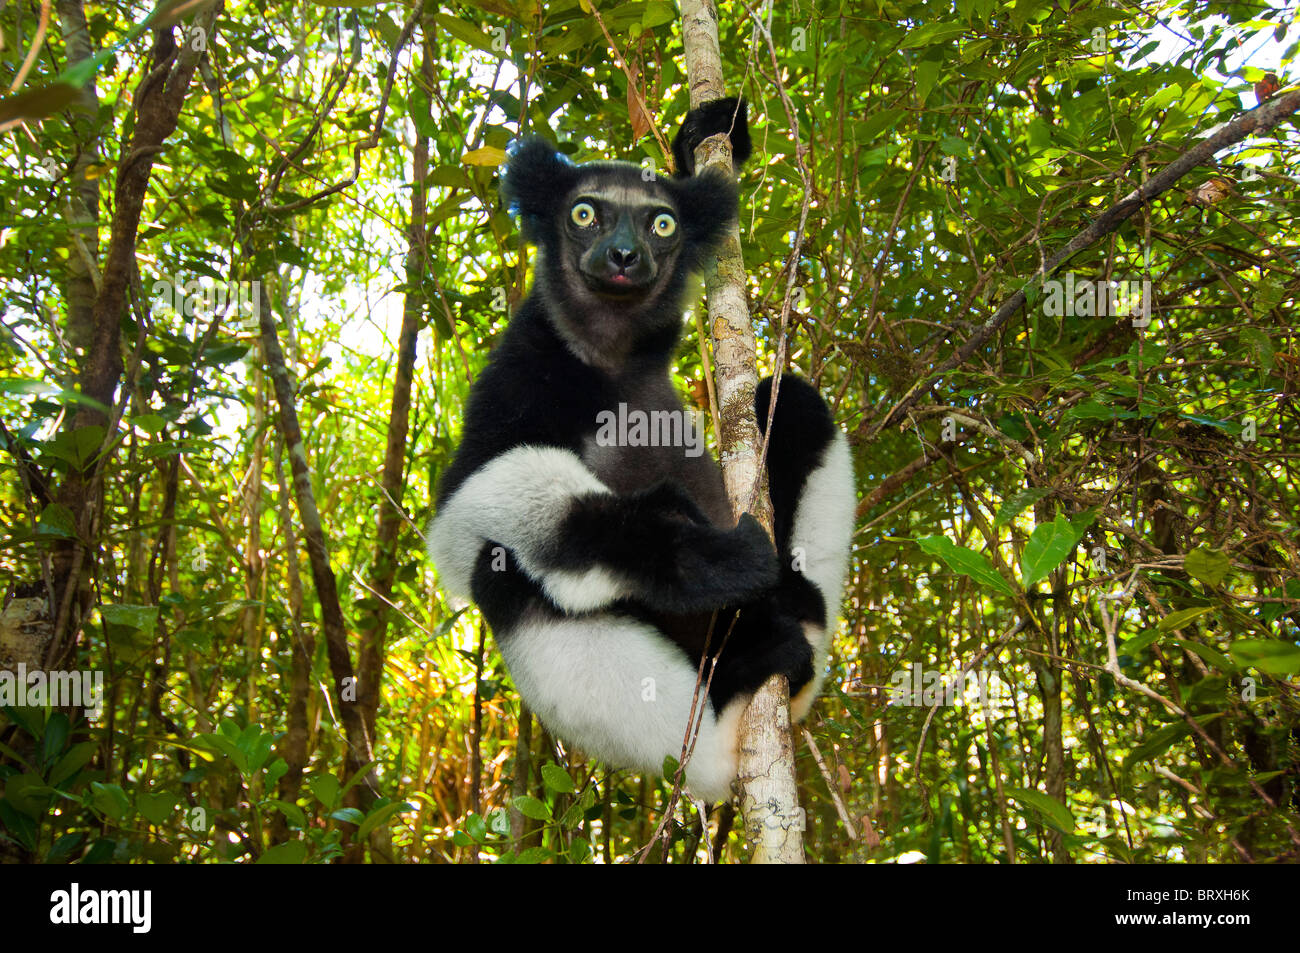 lemur wildlife Diadem Sifaka Propithecus diadema edwardsi Madagascar madagaskar lemur wild forest rainforest tree prosimian Stock Photo